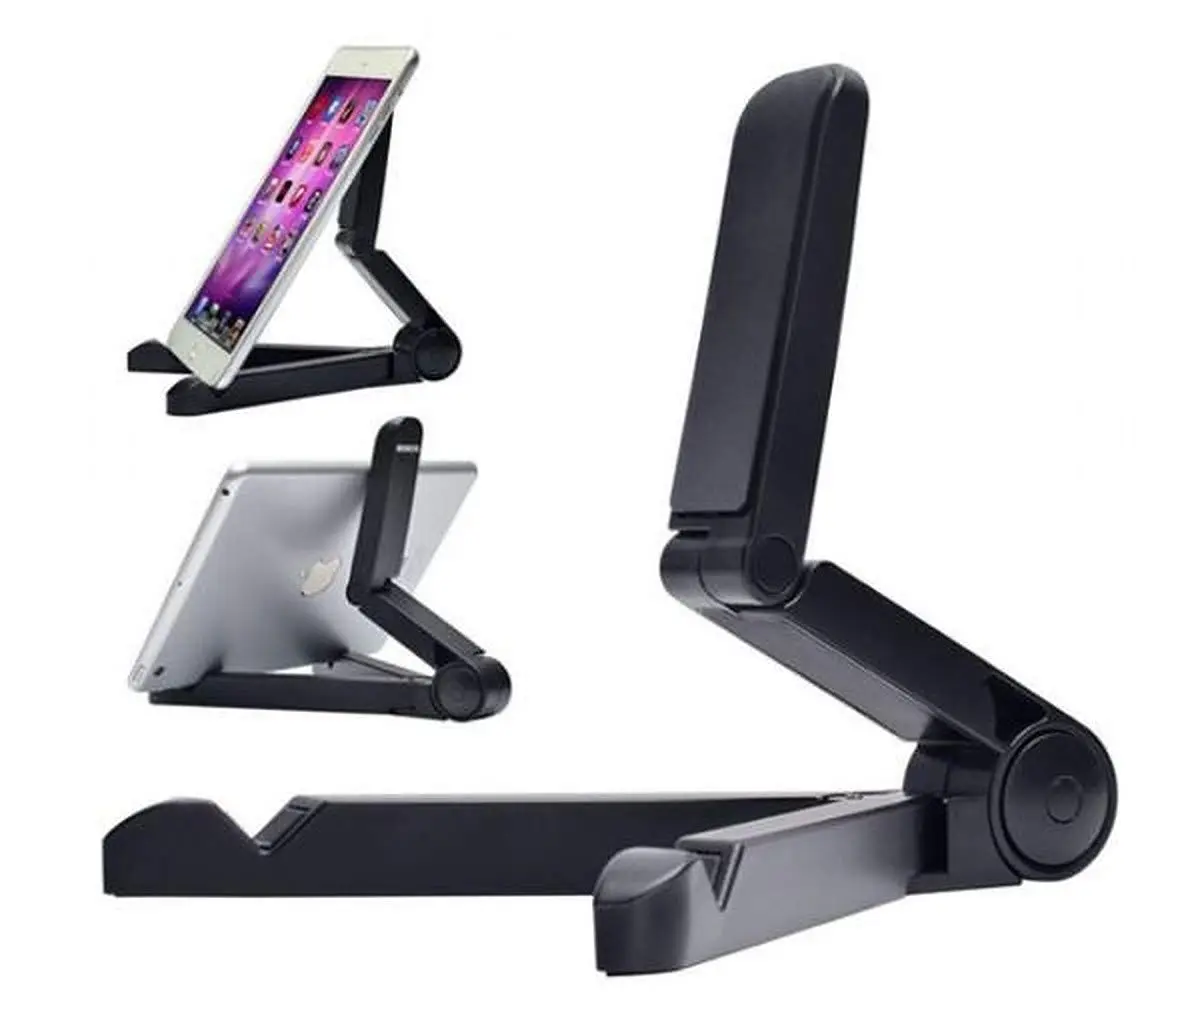 eubell Cell Phone Desk Stand Holder Desktop Portable Universal Desk Stand for All Mobile Smart Phone Tablet Display,Random Color 